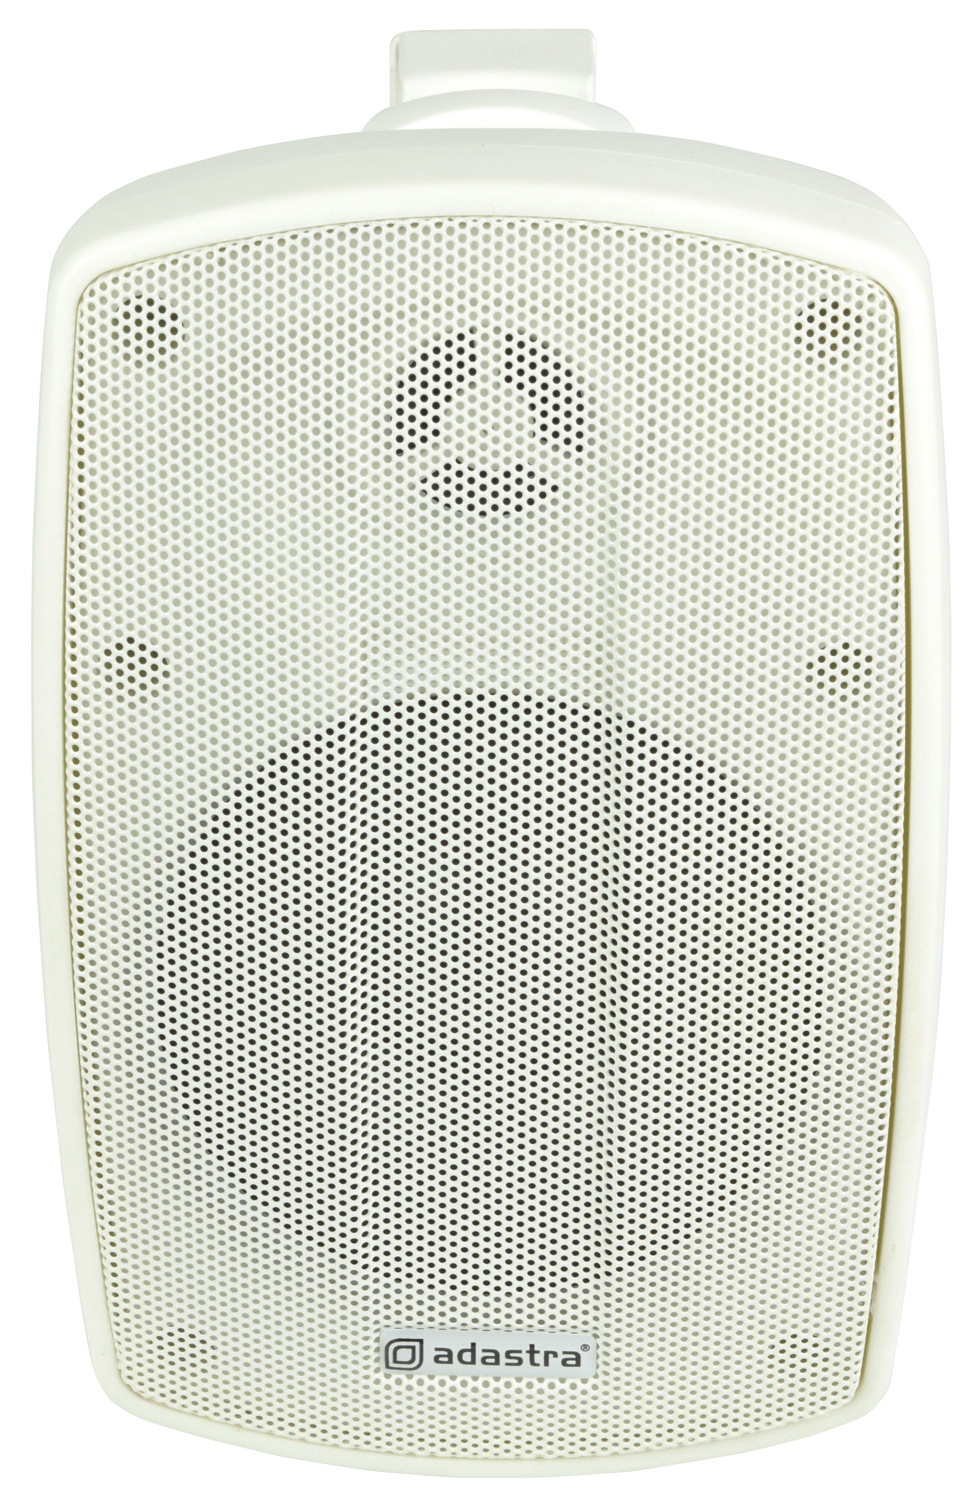 Adastra 952.612UK loudspeaker 2-way White Wired 60 W